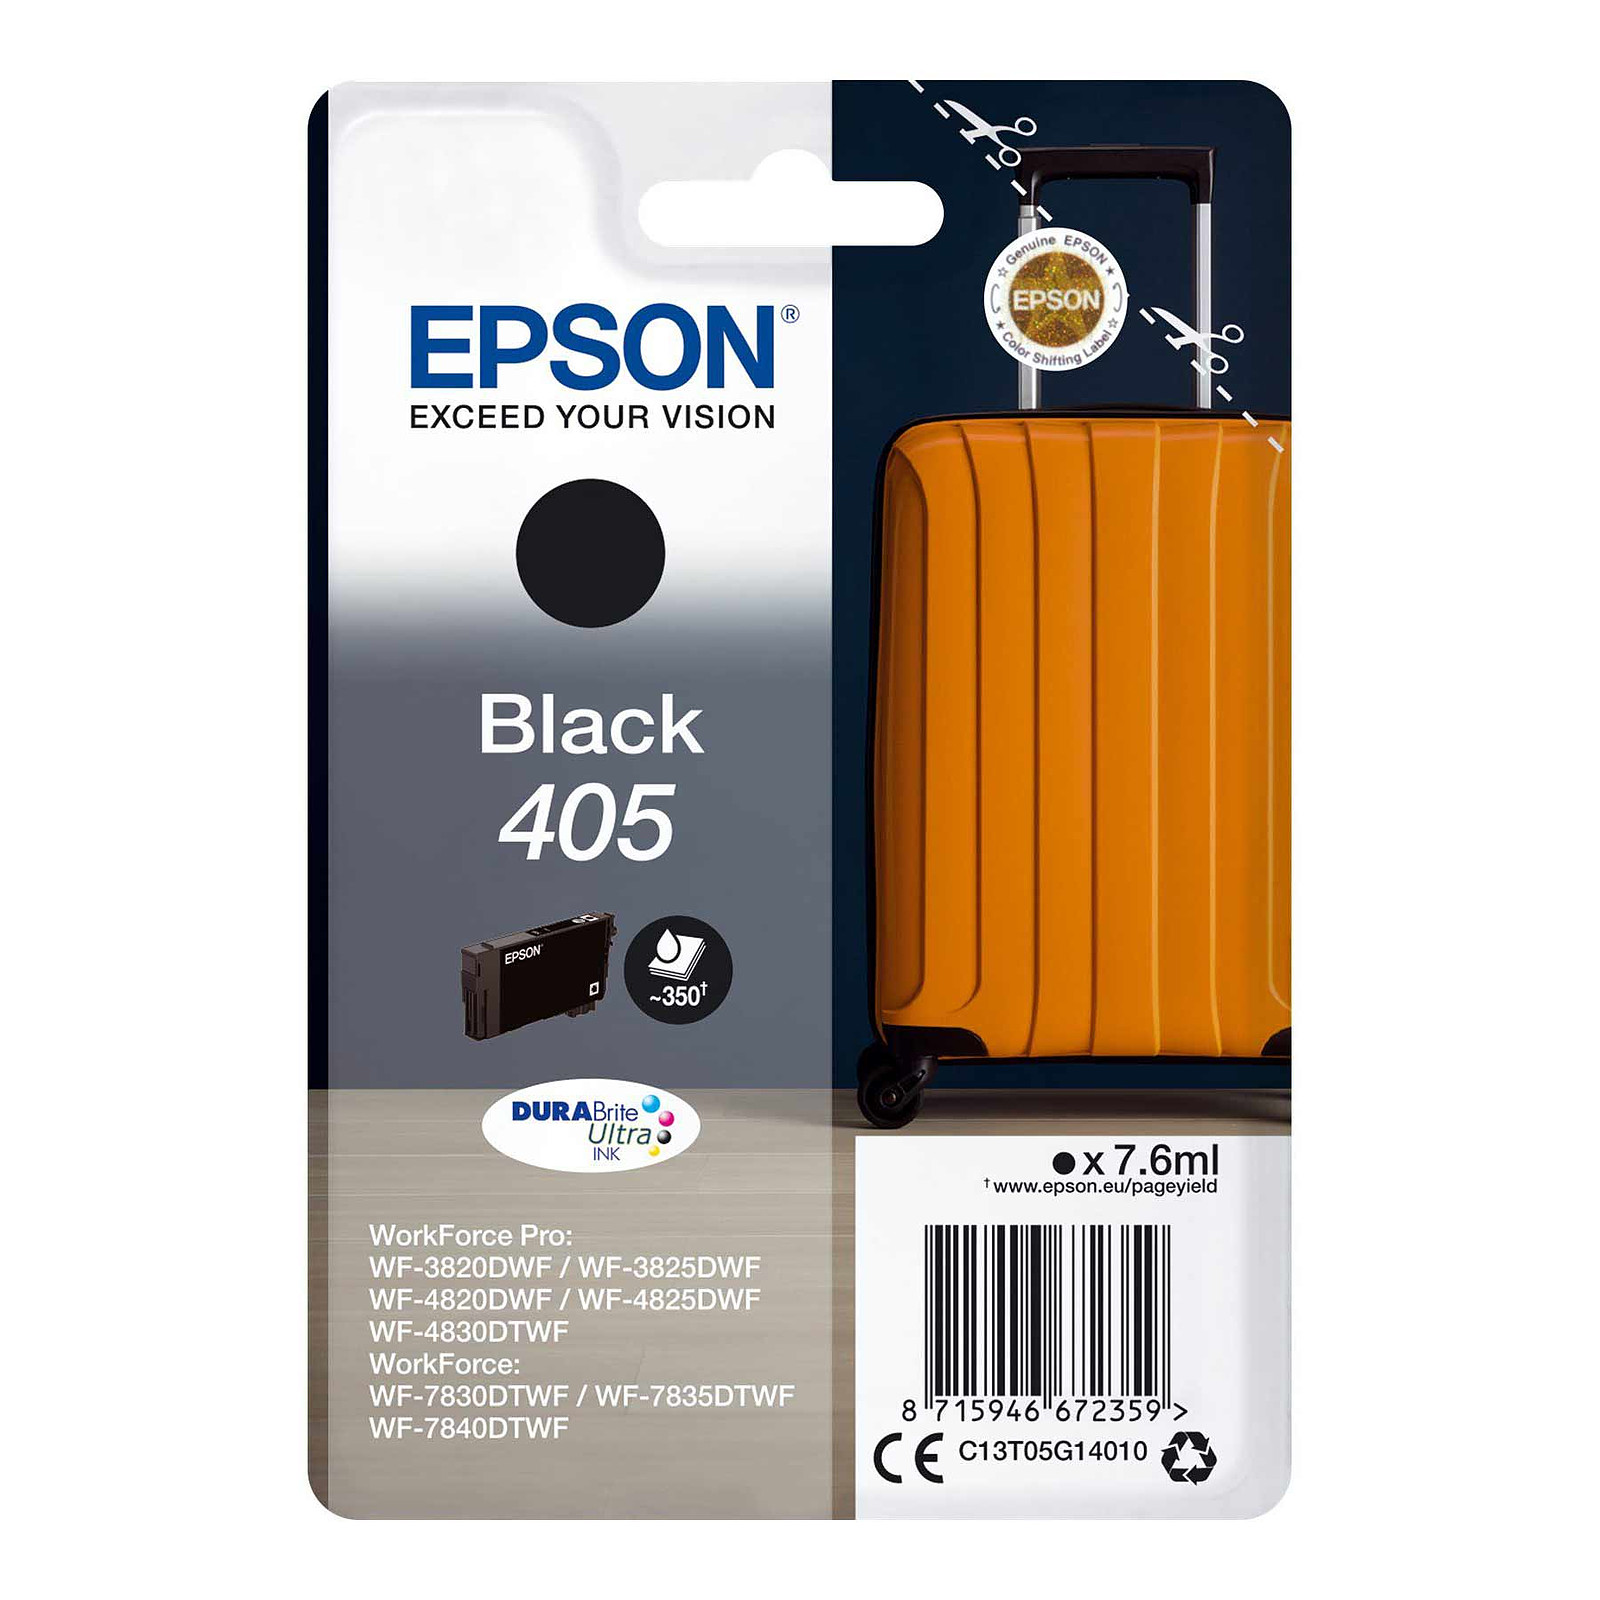 Epson Valise 405 Noir - Cartouche imprimante Epson